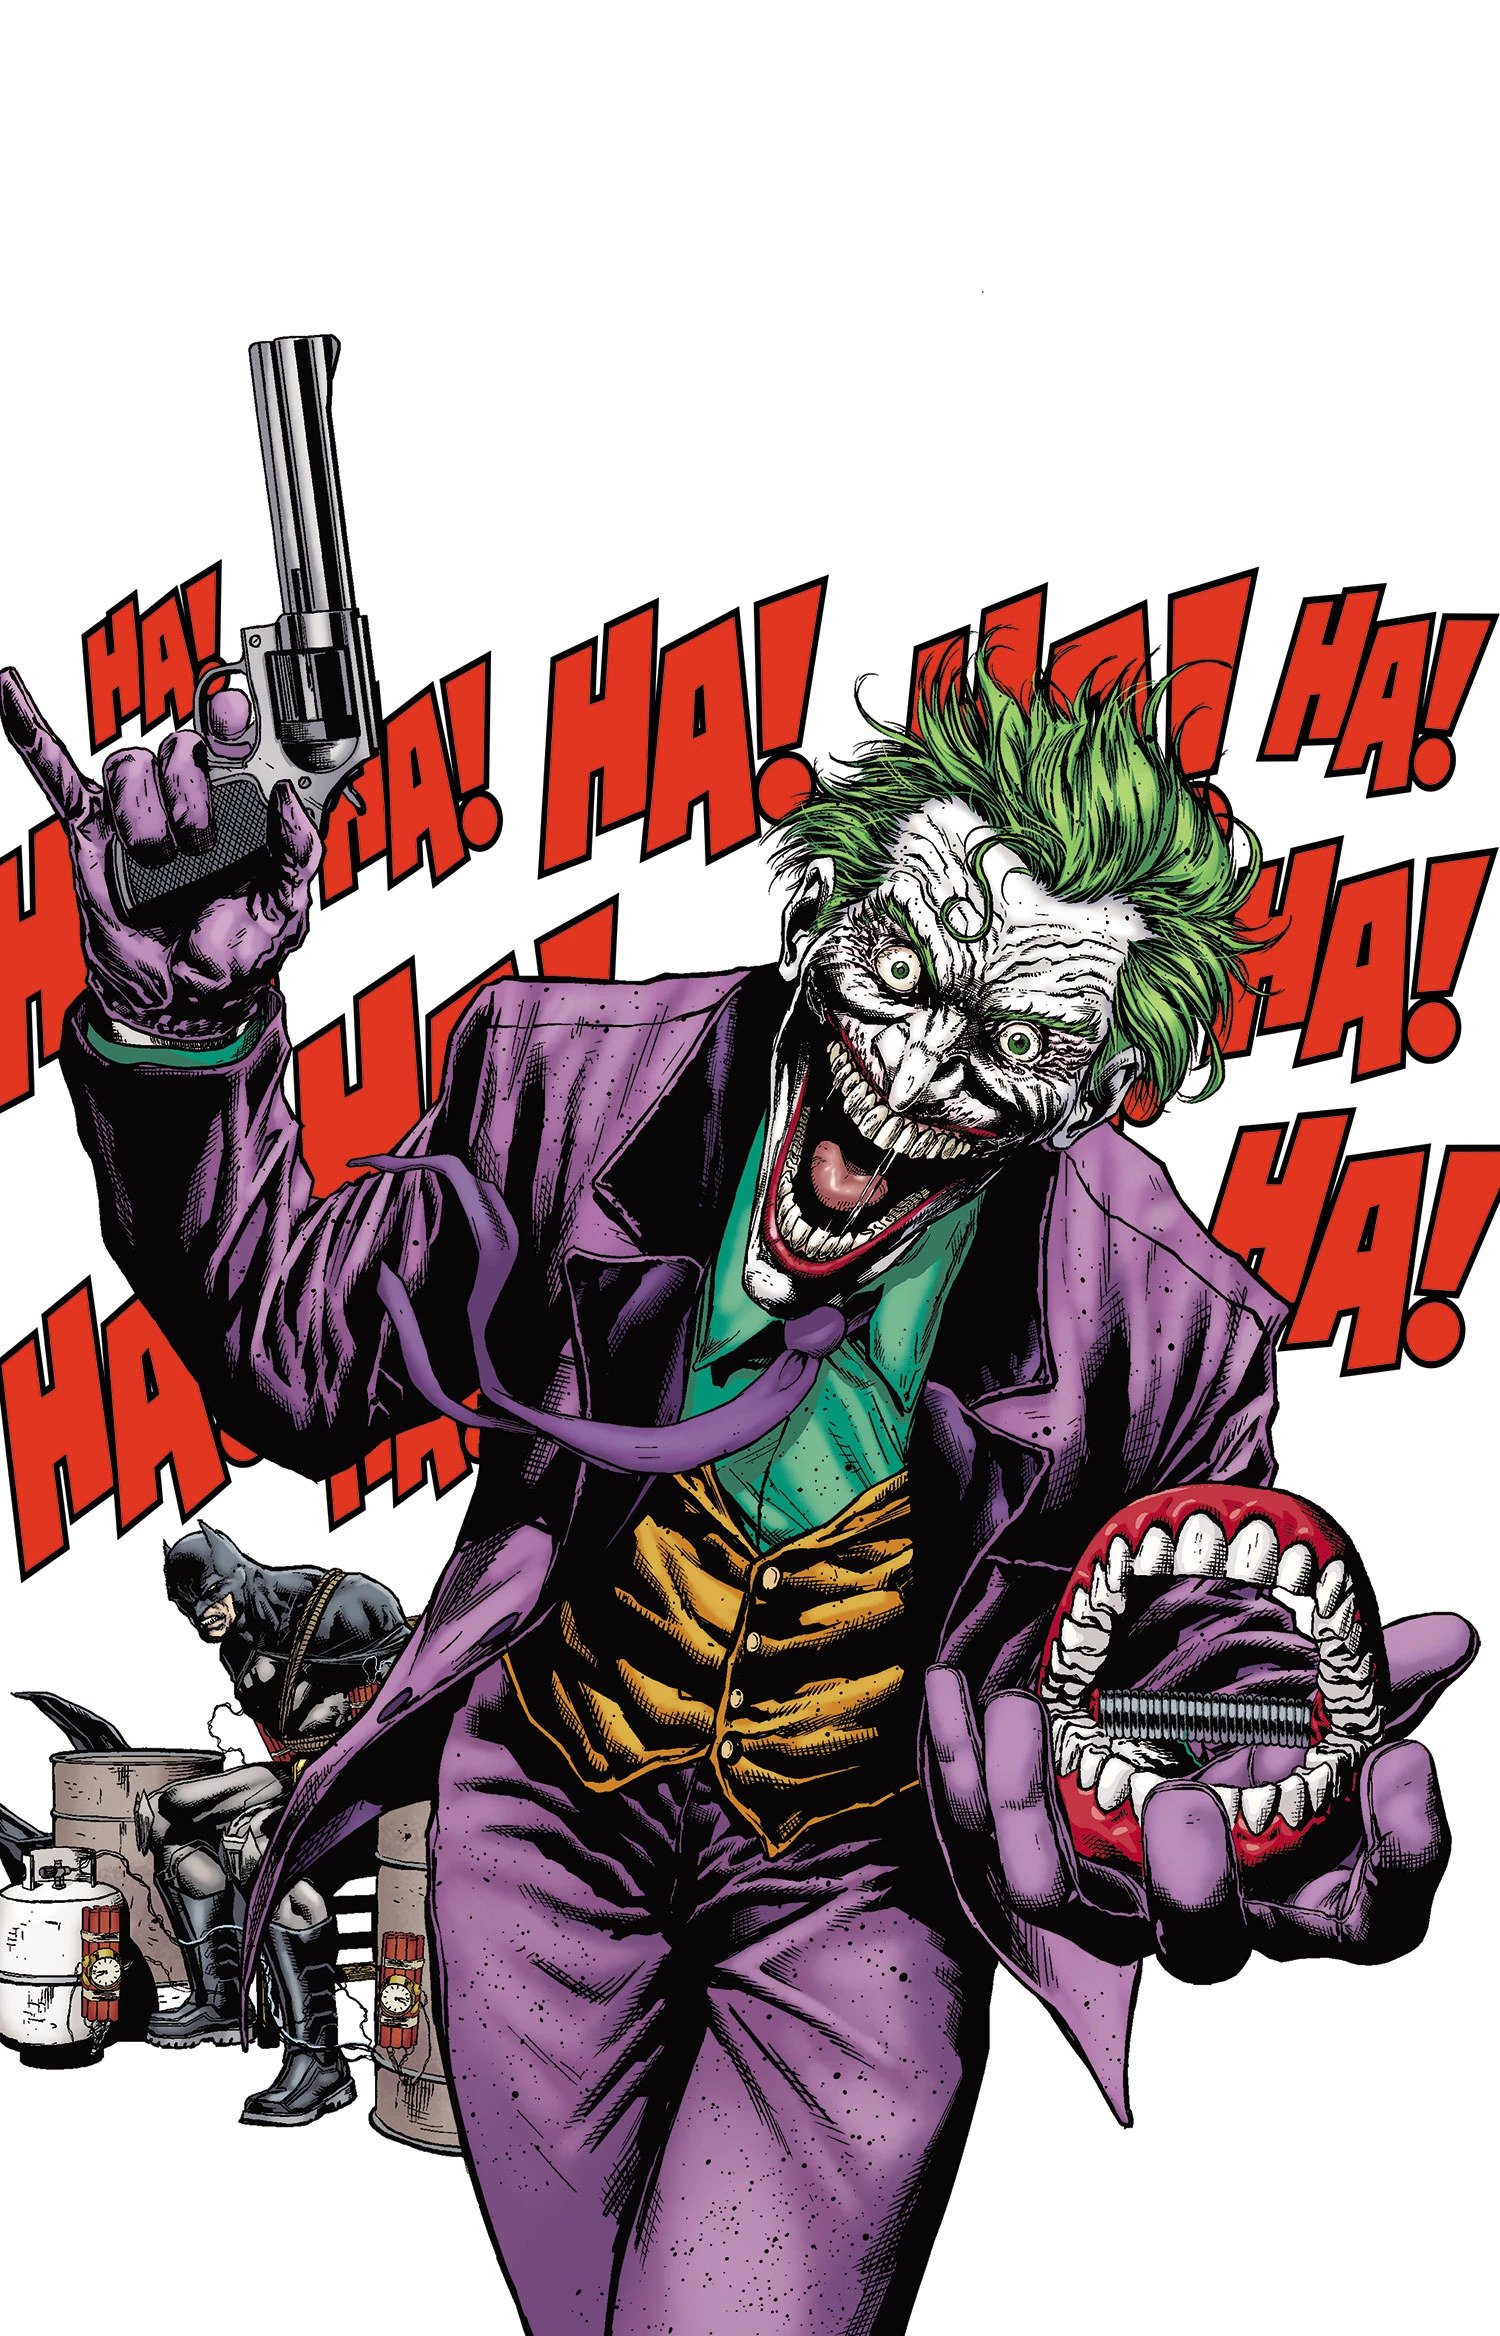 Joker (The Lego Batman Movie), Villains Wiki